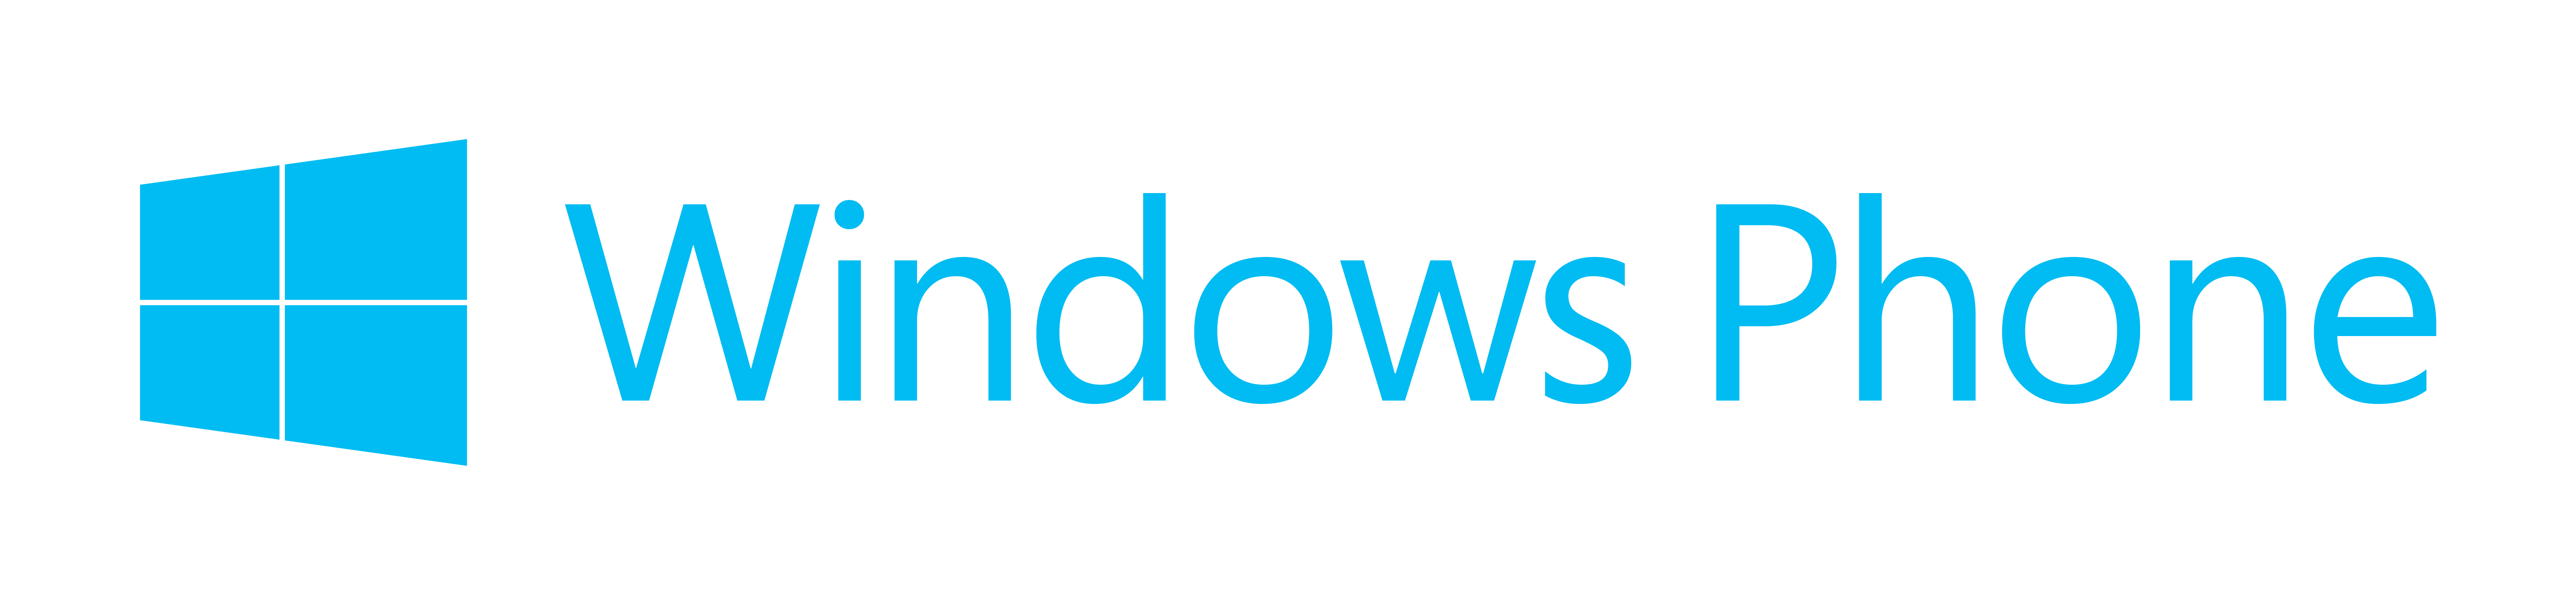 Windows Phone Logo - NAU - ITS - Windows Phone